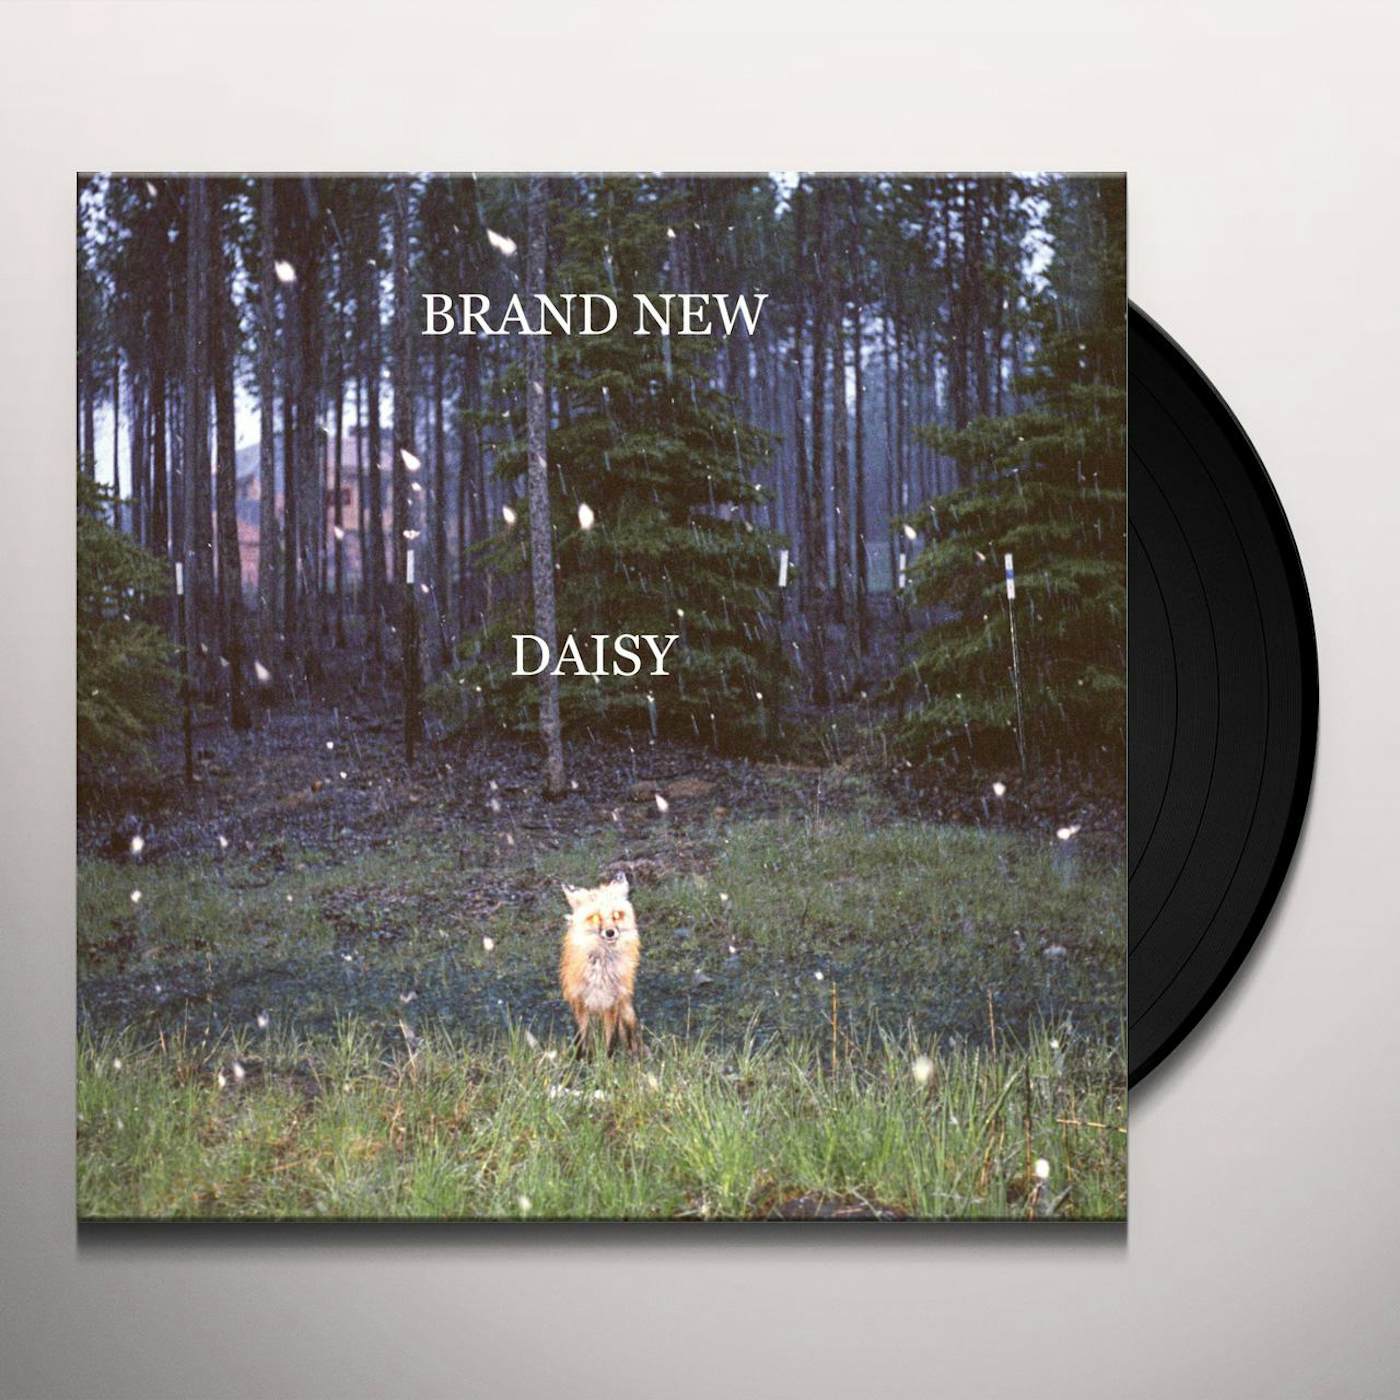 [DAMAGED] Brand New - Daisy LP